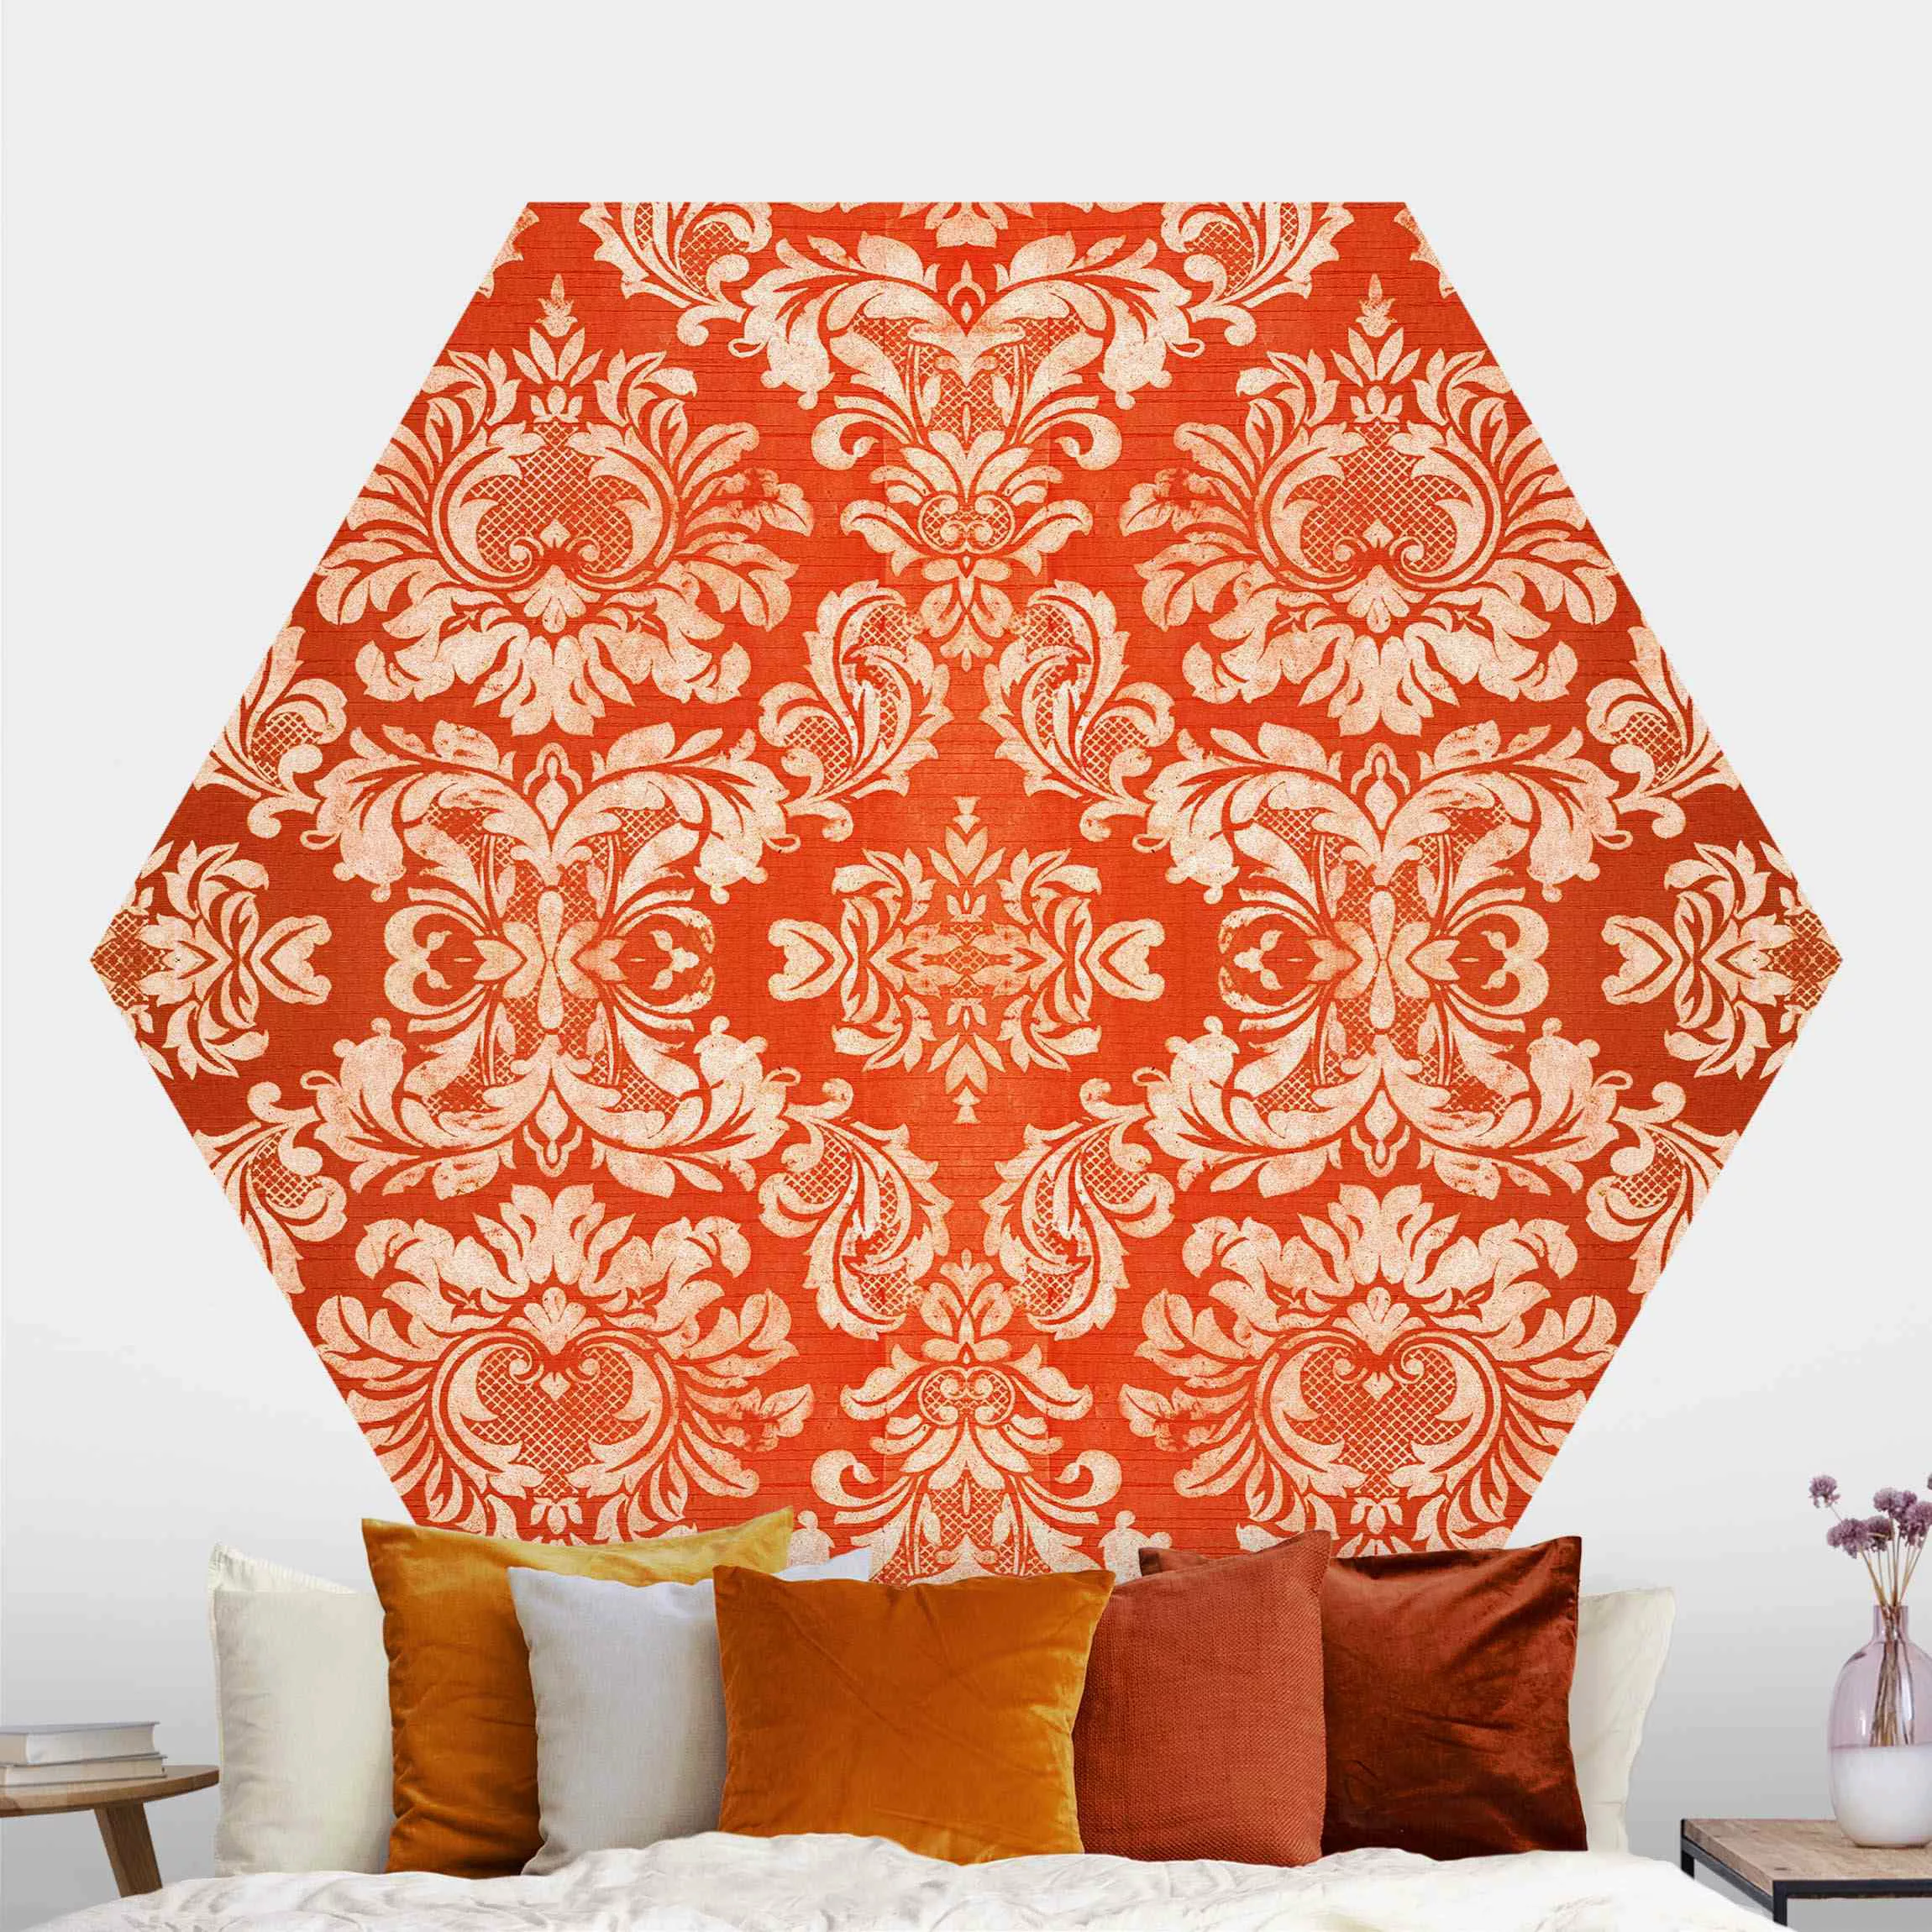 Hexagon Mustertapete selbstklebend Barocktapete günstig online kaufen